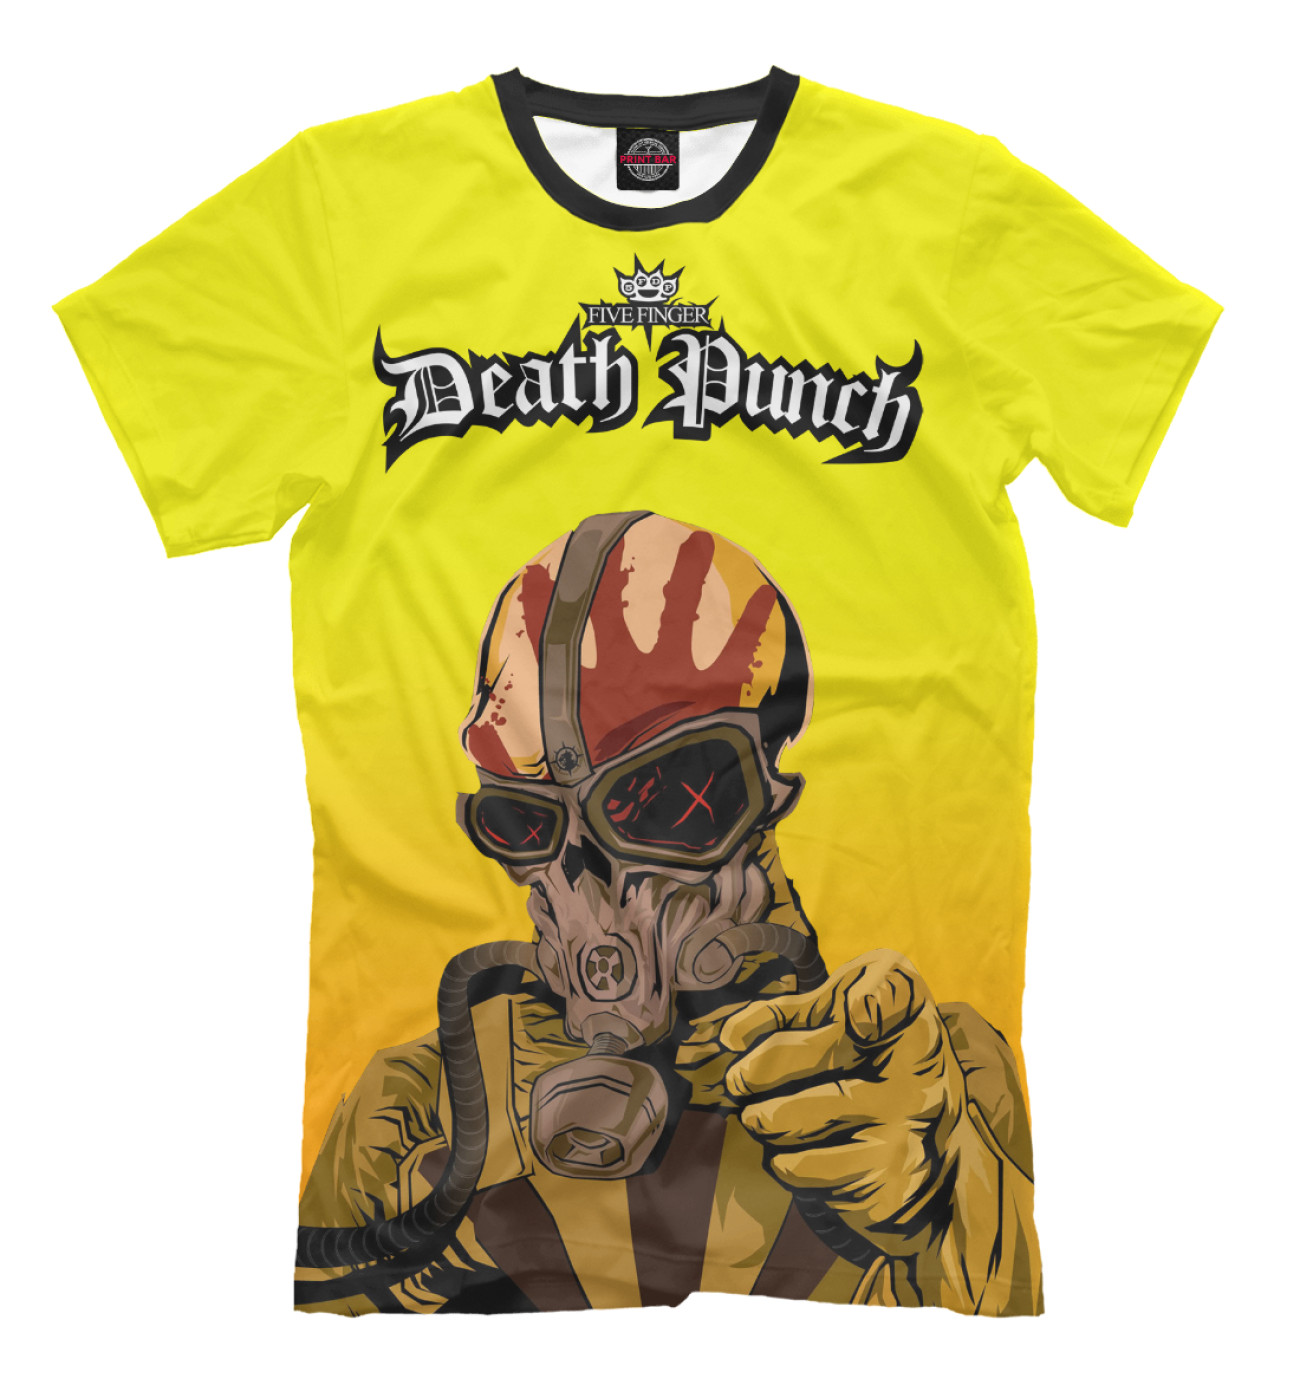 Мужская Футболка Five Finger Death Punch War Is the Answer, артикул: FFD-767578-fut-2